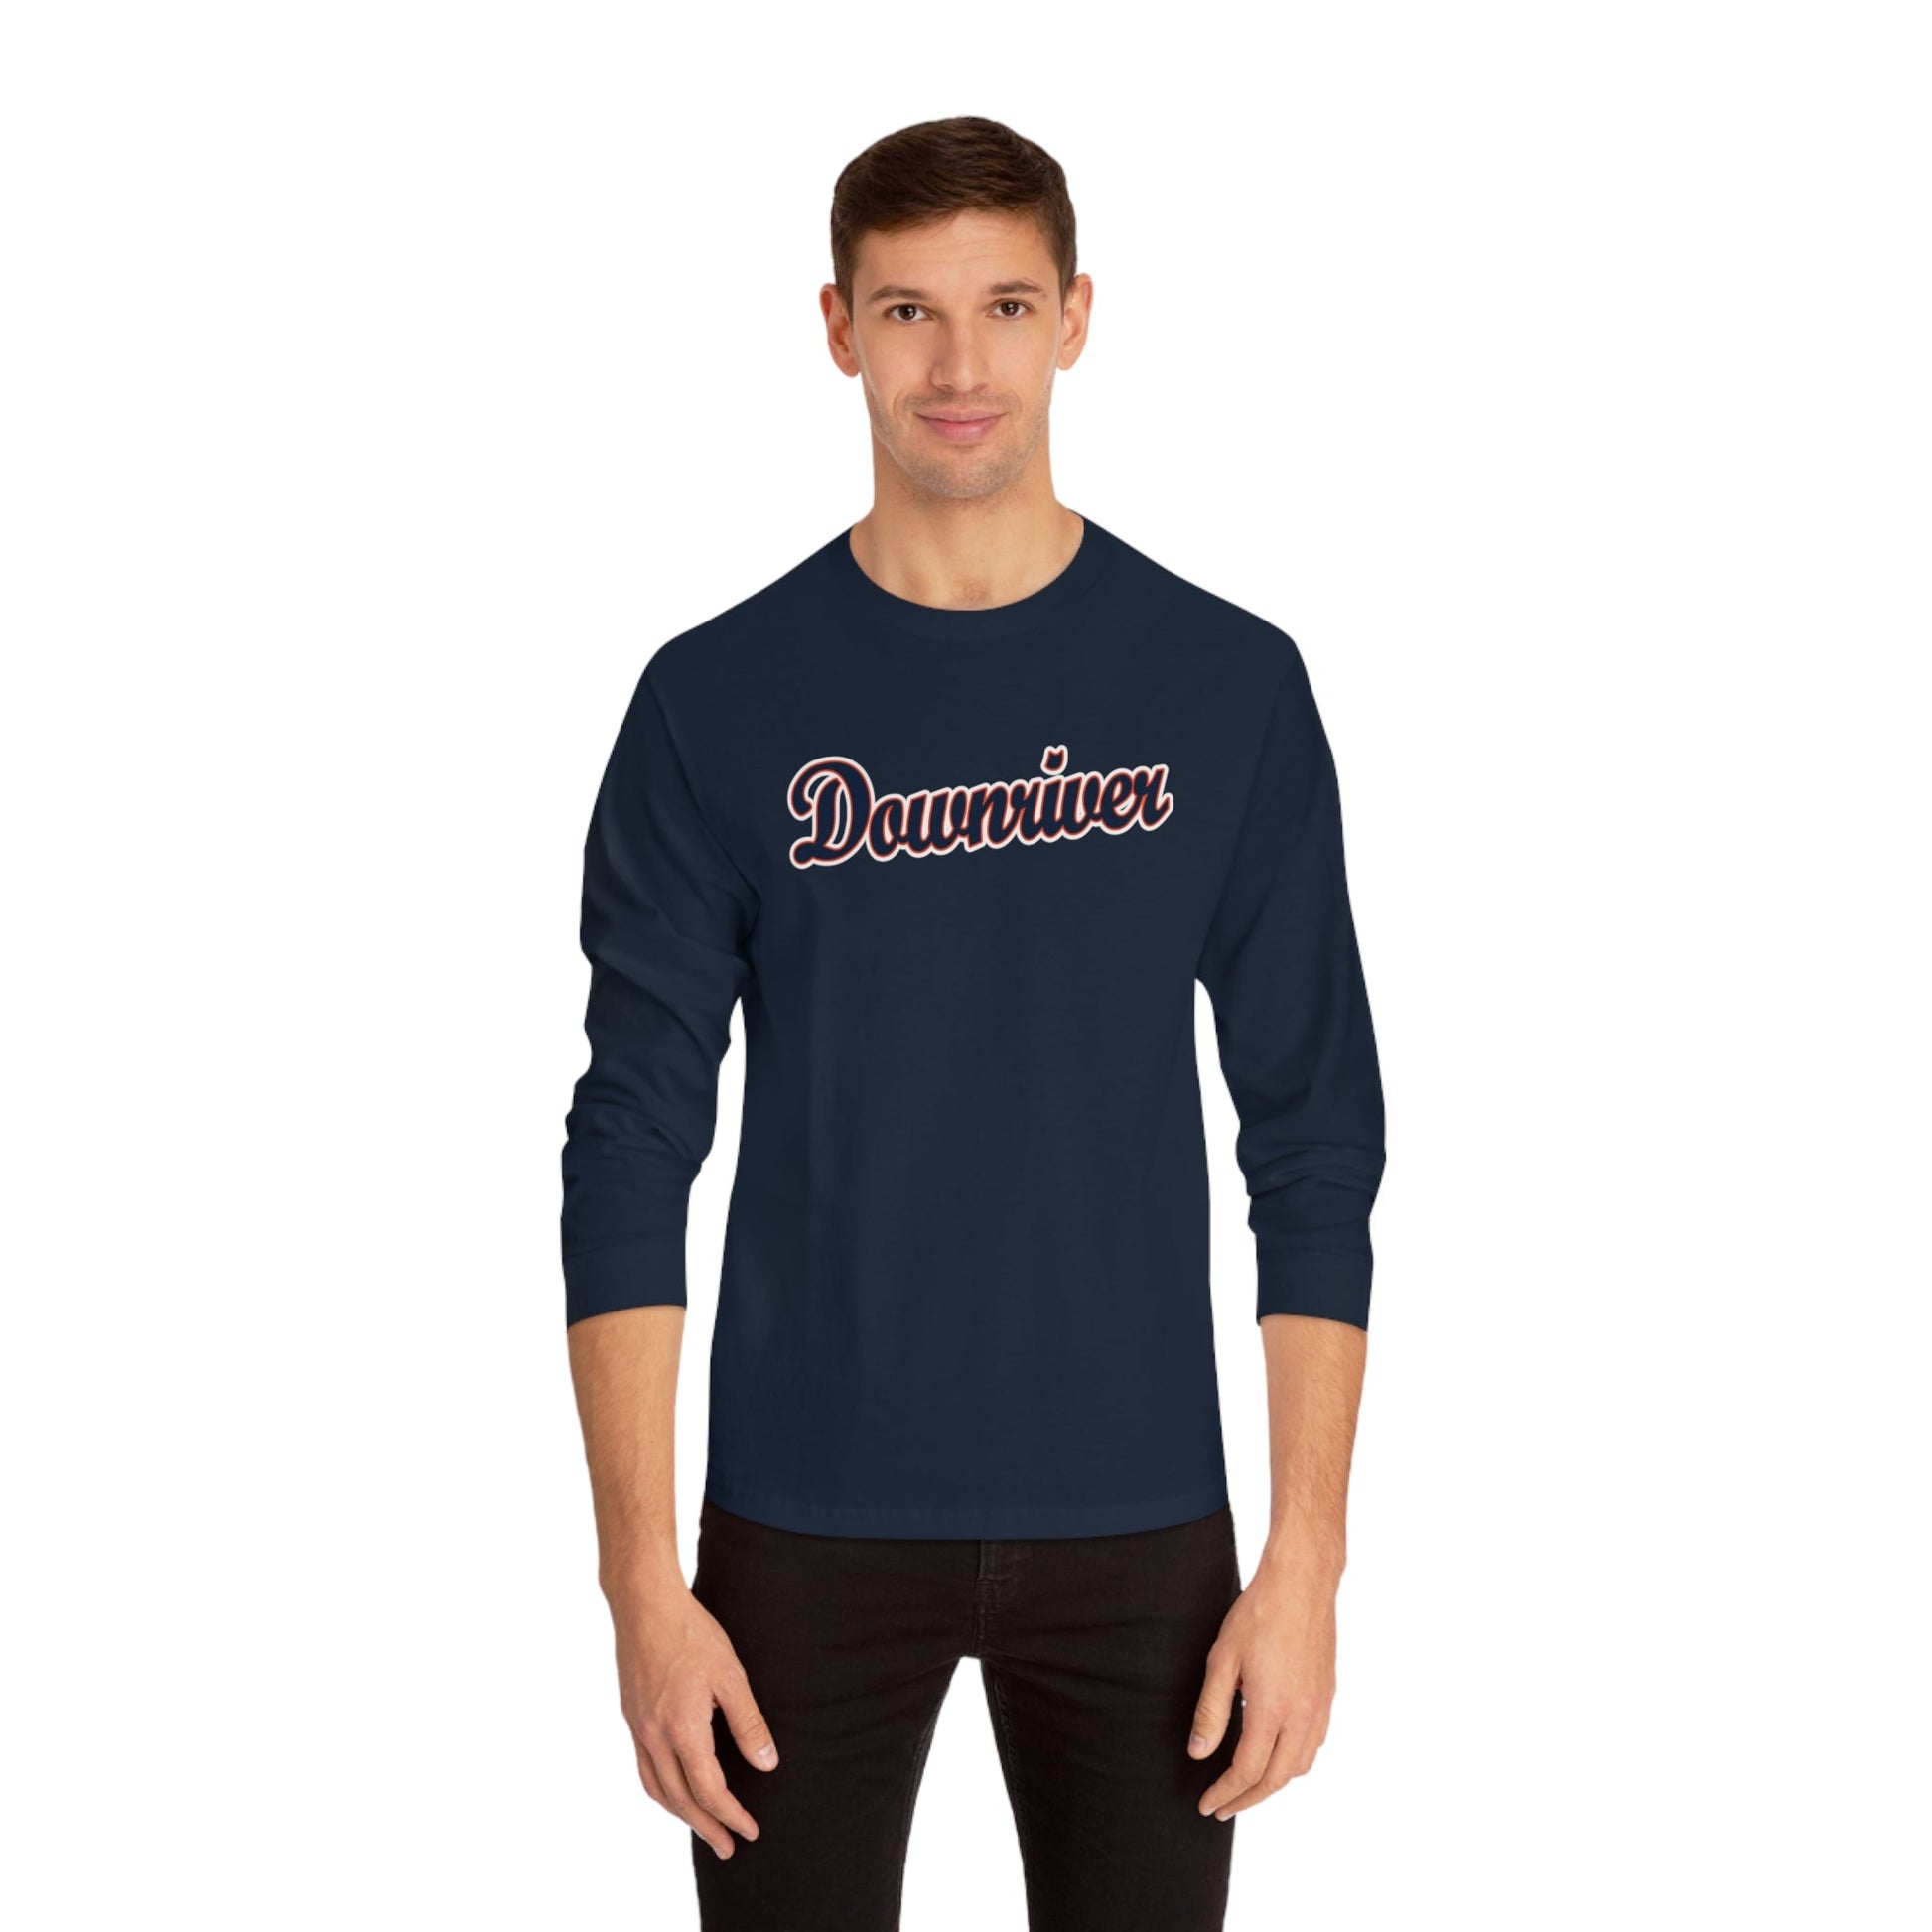 Downriver 95 Baseball Heavyweight Long Sleeve T Shirt | Downriver Clothing Apparel | Detroit Michigan | Downriver World